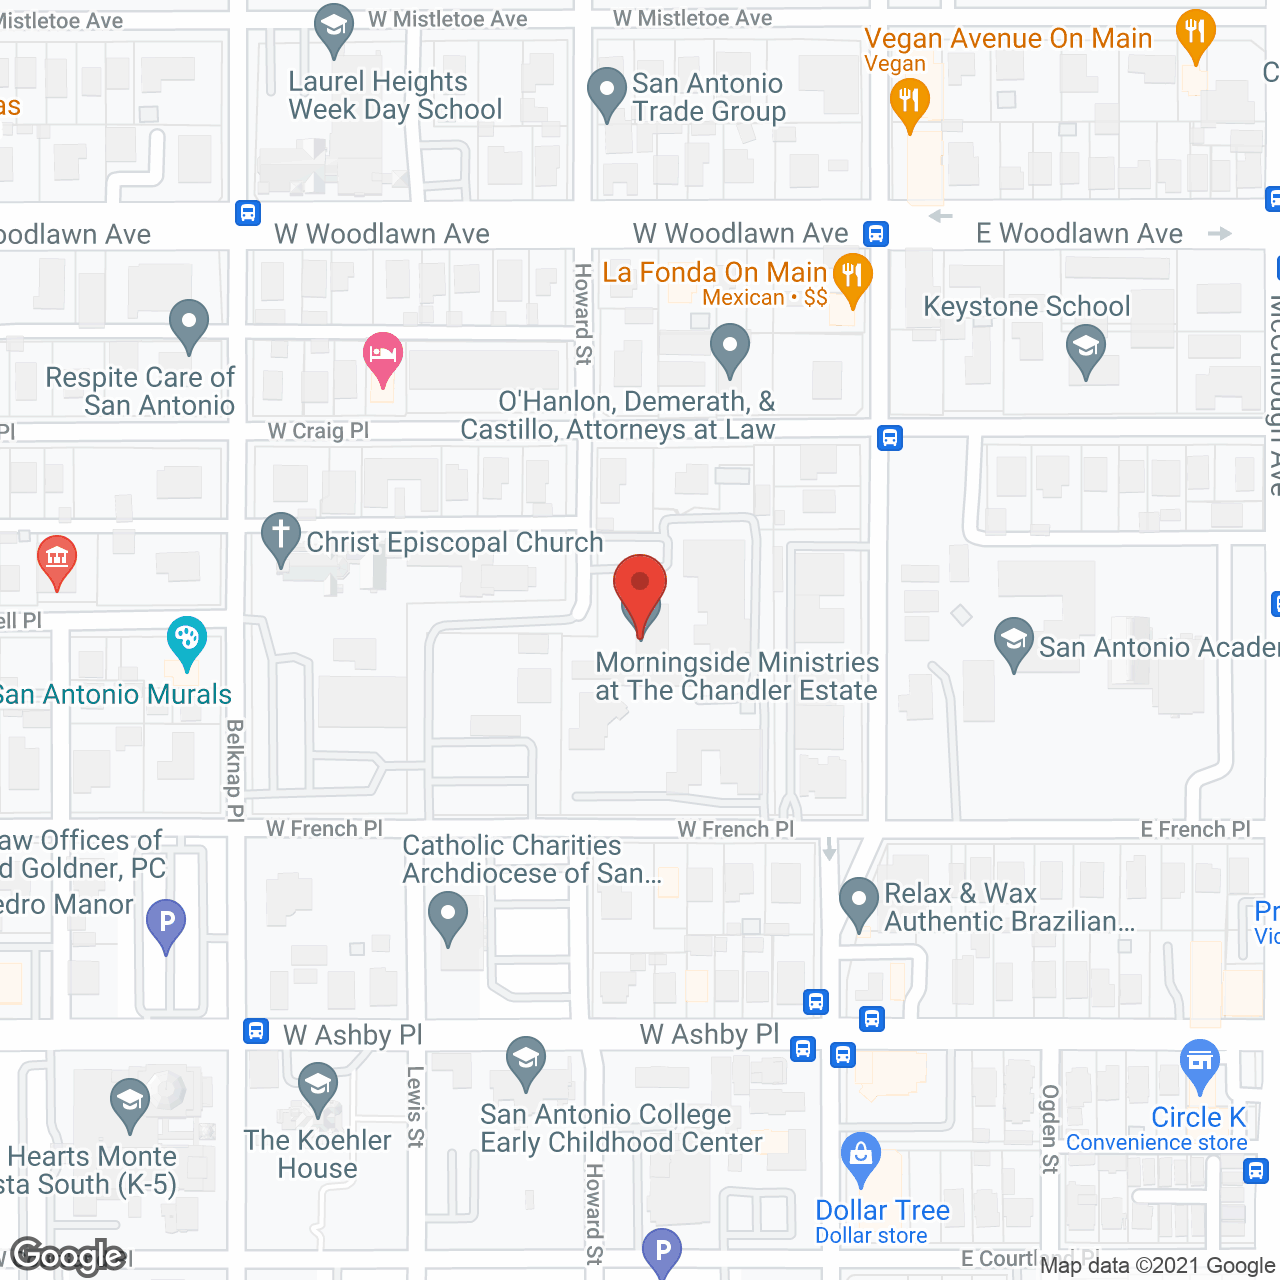 Morningside Ministries at Chandler Estate in google map